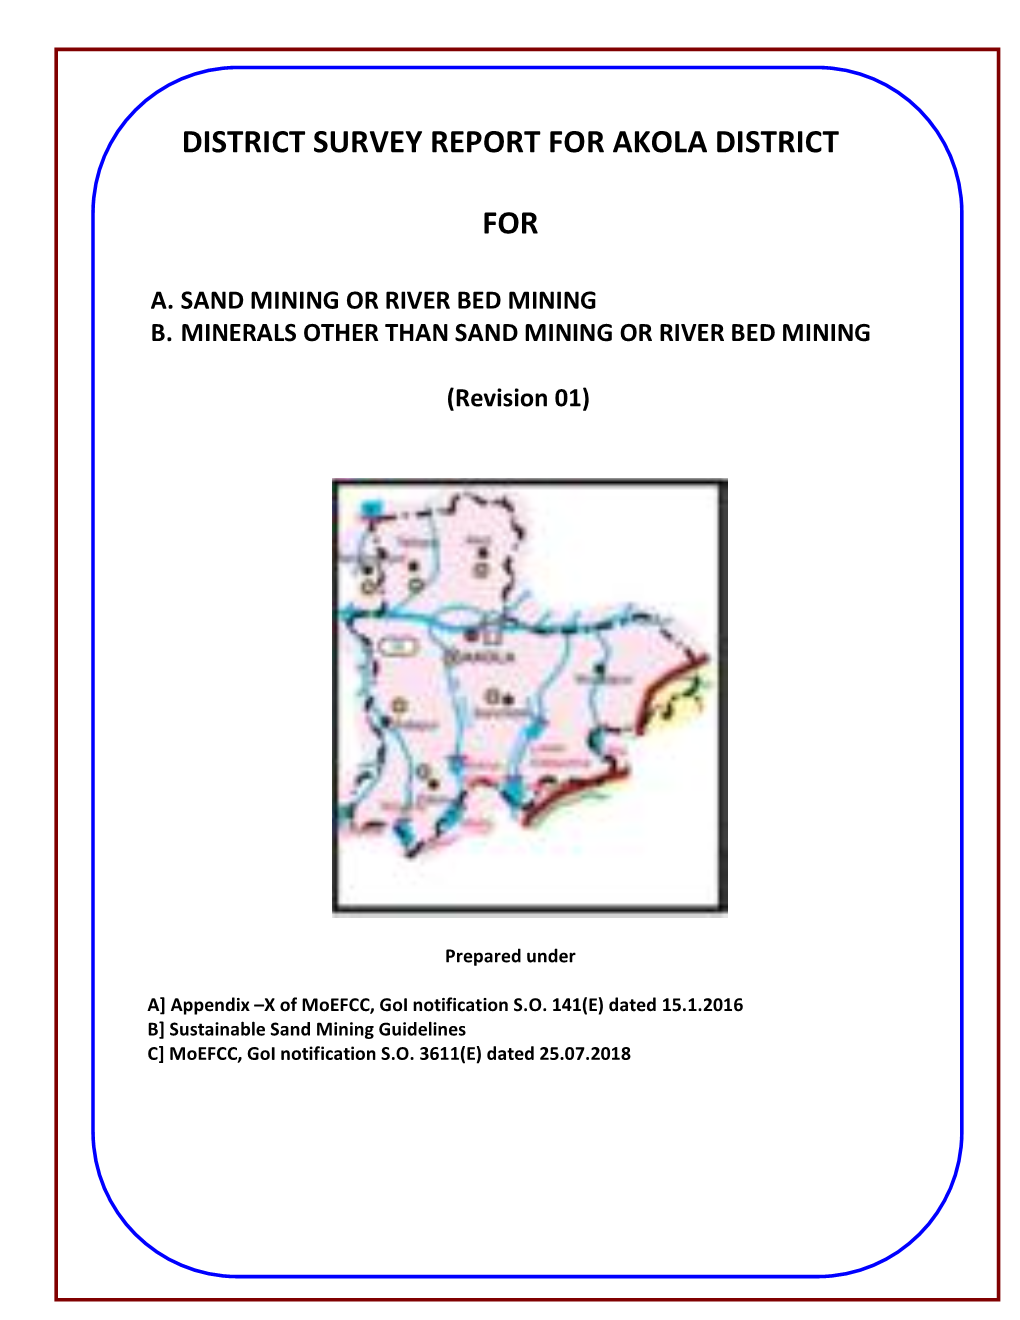 District Survey Report for Akola District